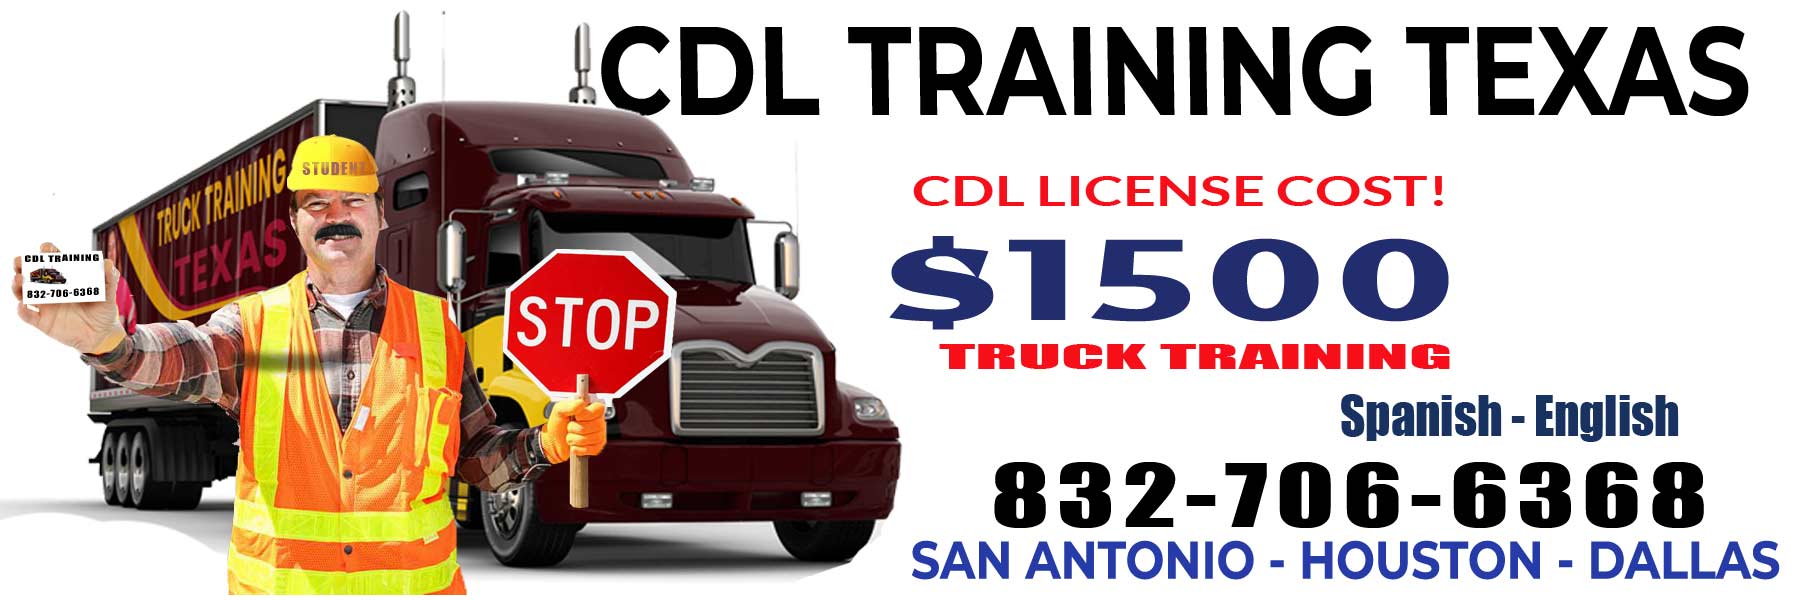 CDL School Missouri City TX, Truck Driving Training
